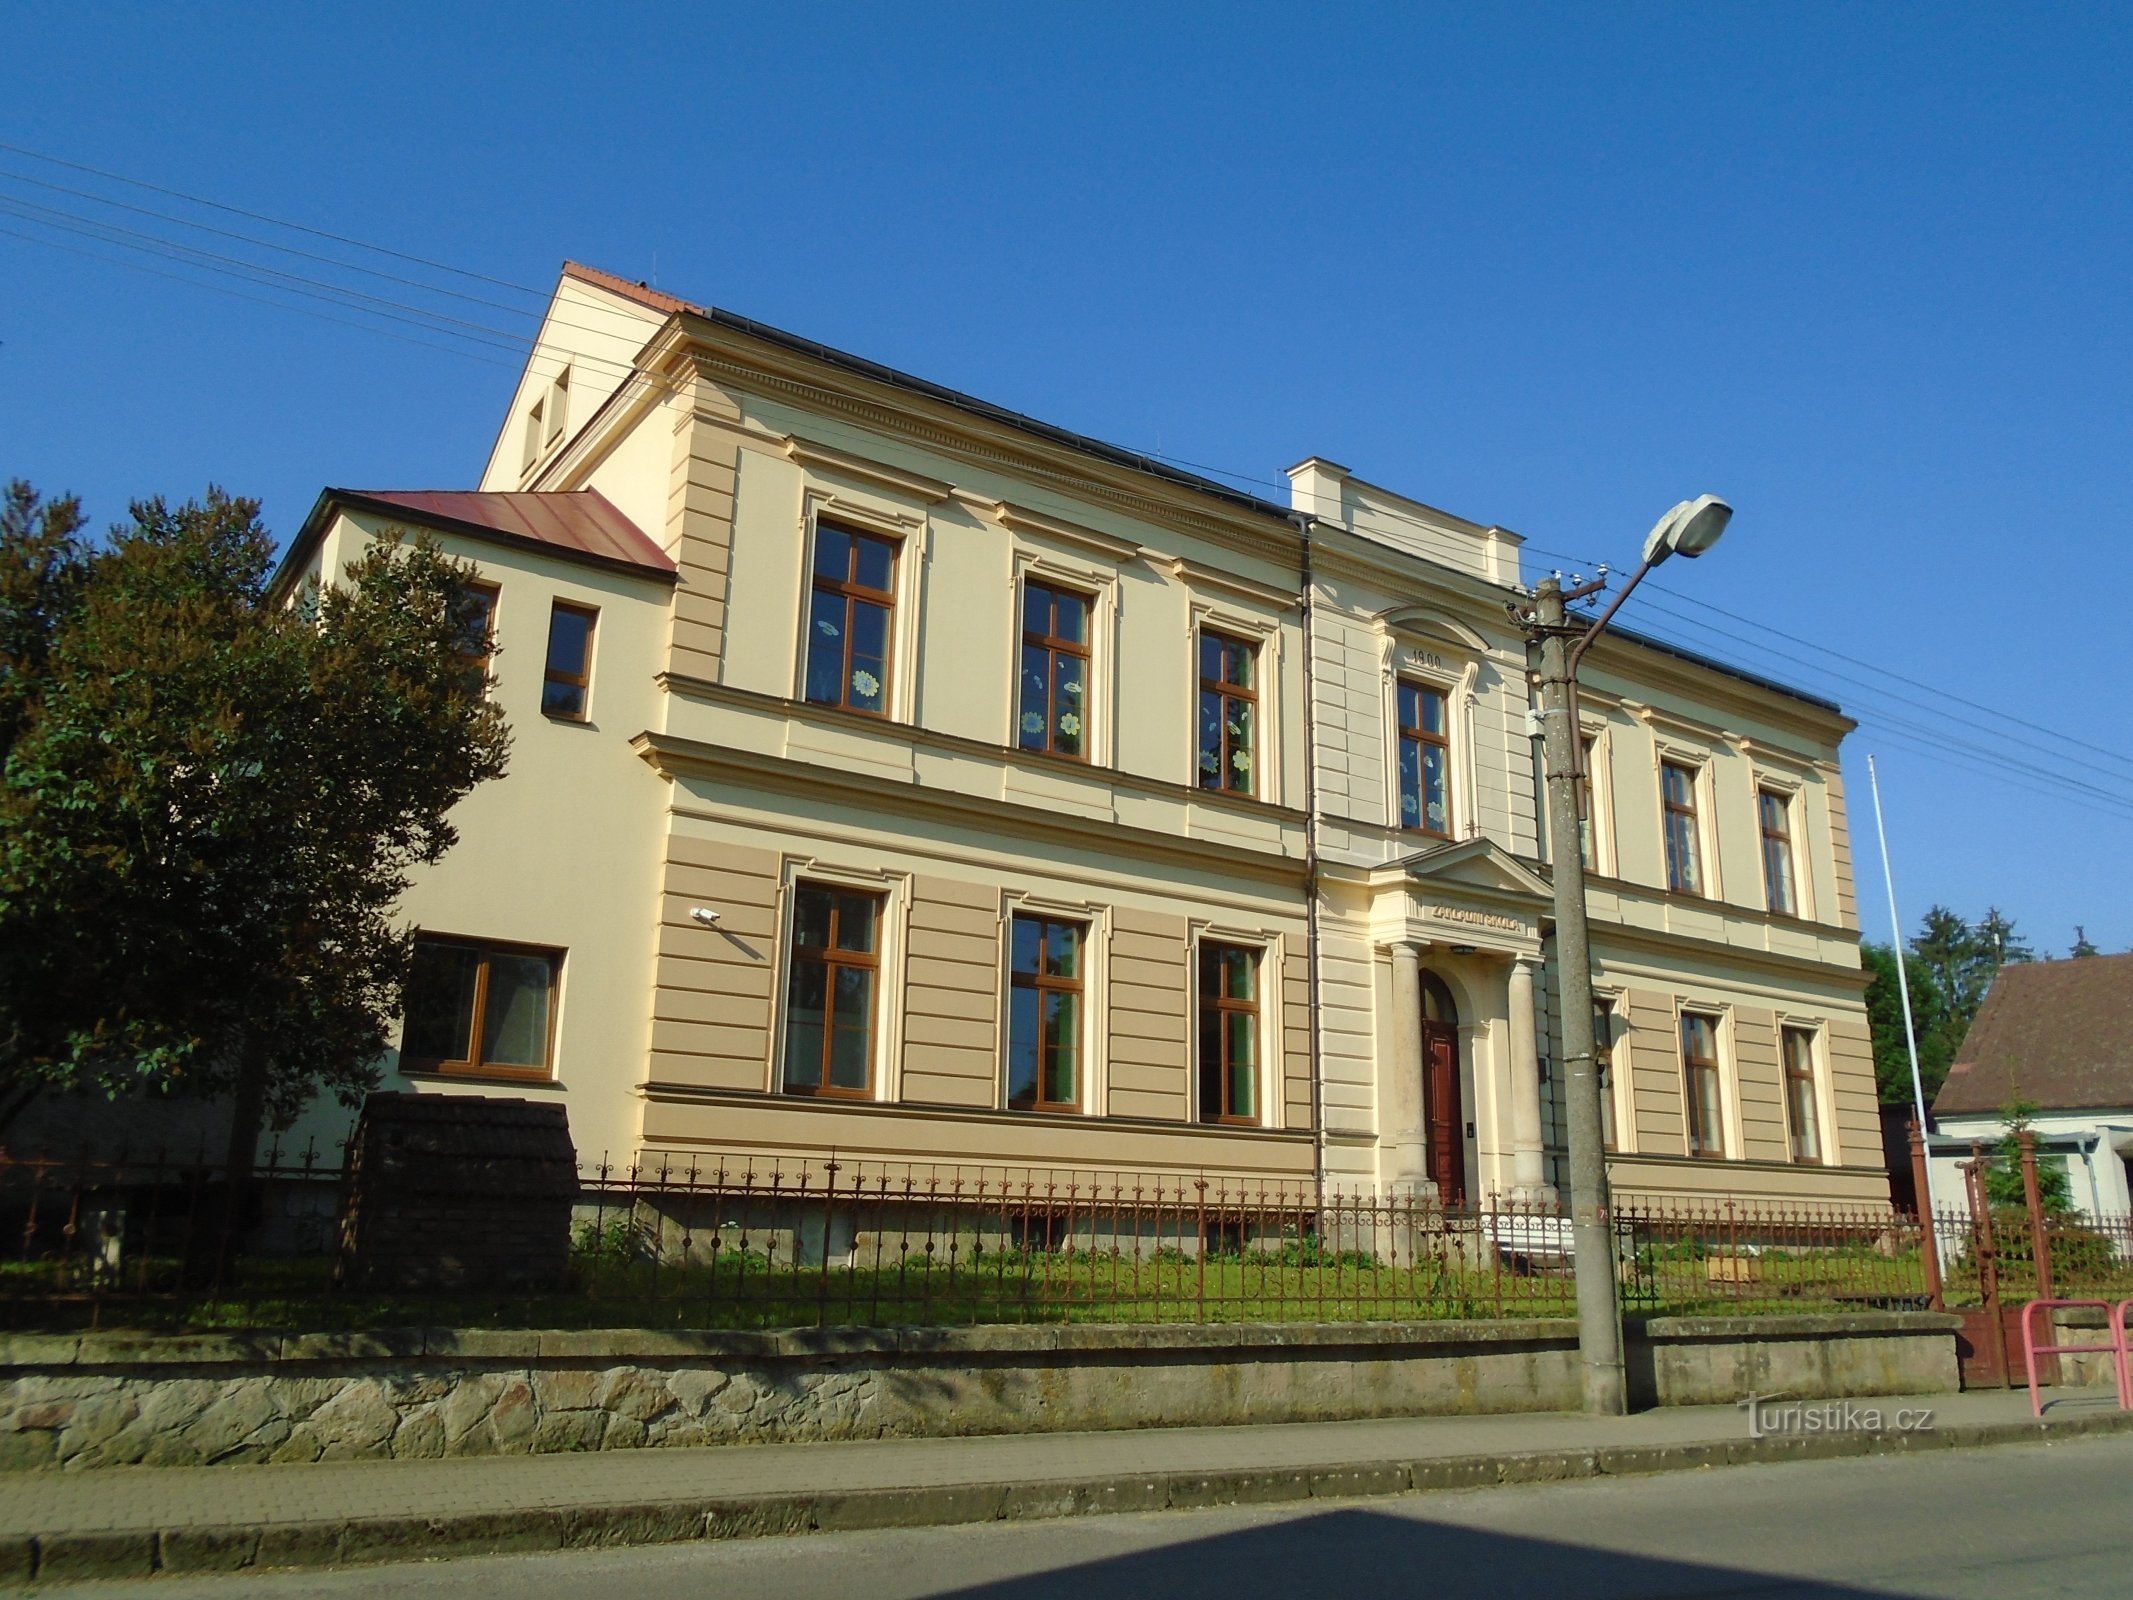 Școala nr. 4 (Hoříněves, 27.5.2018)